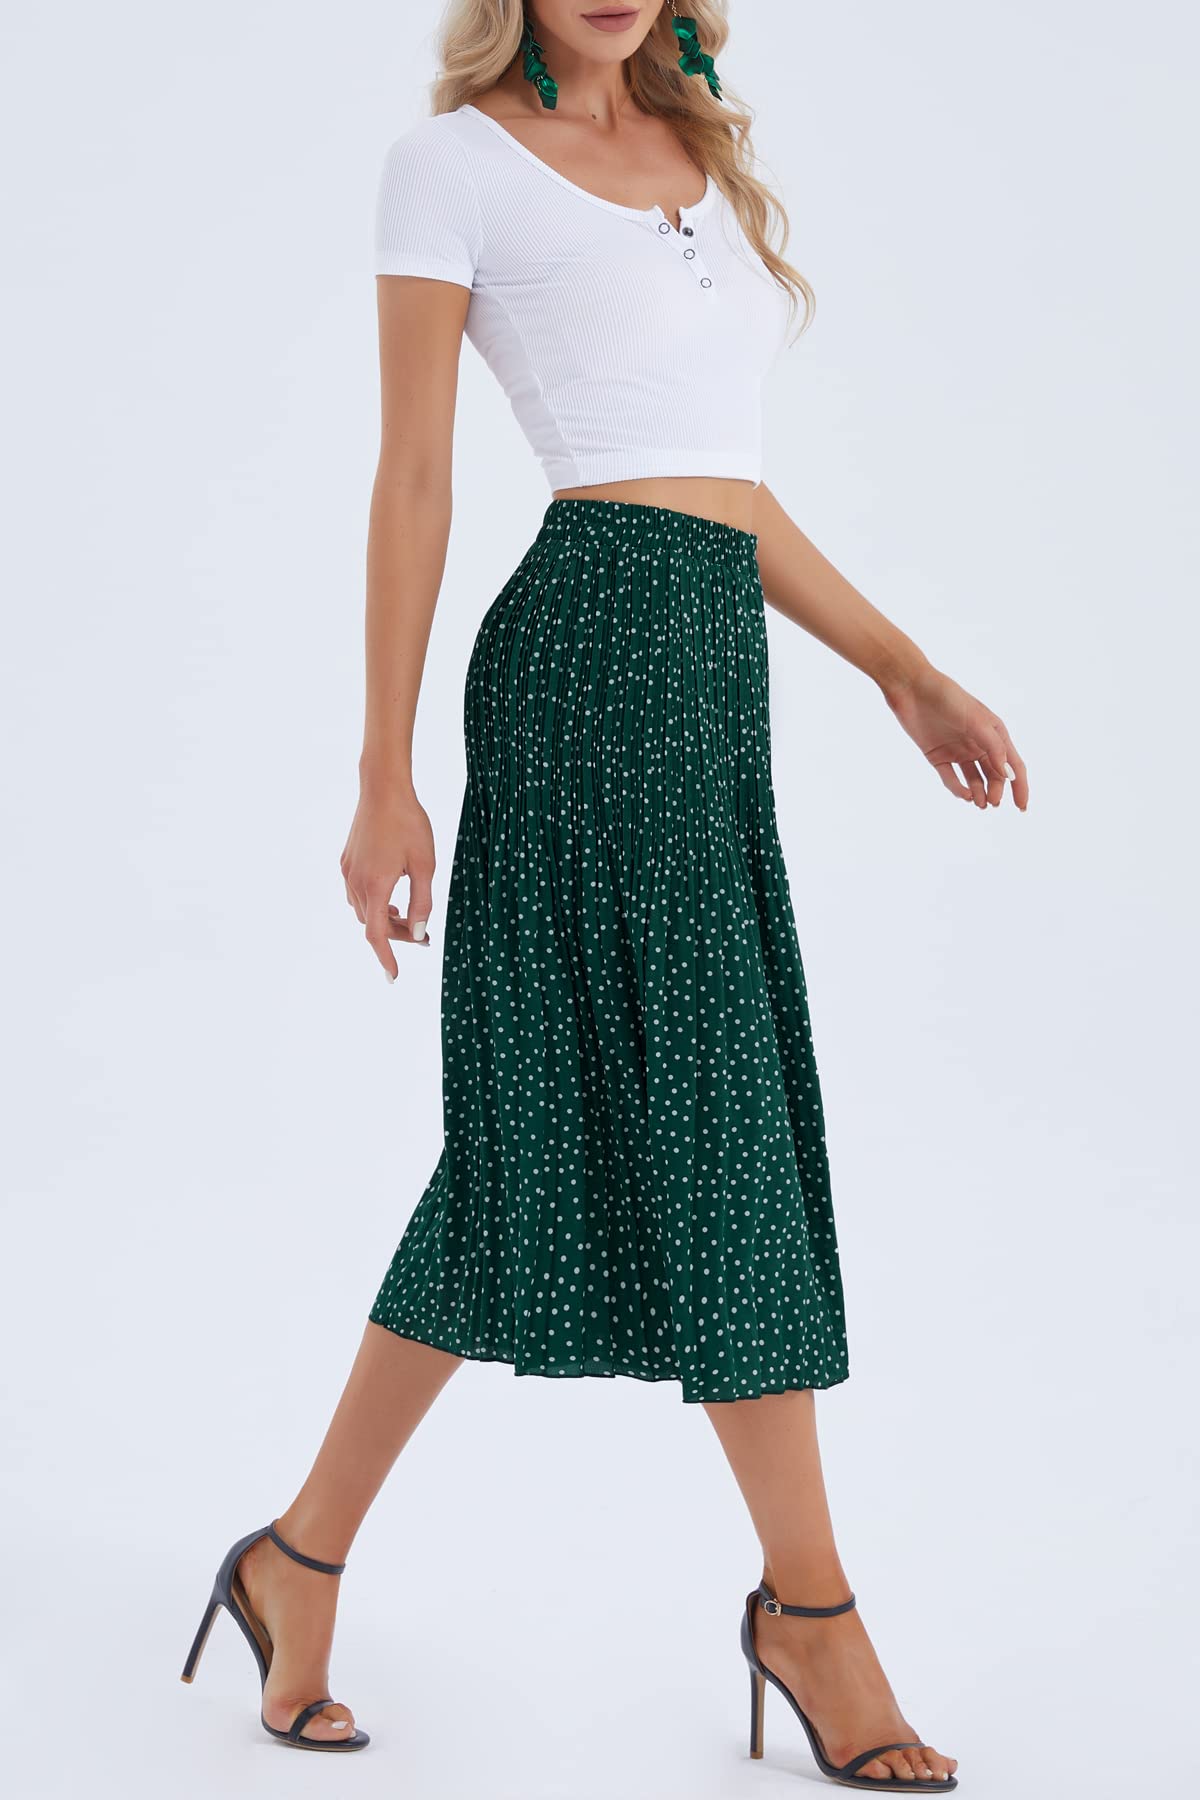 DJT High Waist A-Line Pleated Skirt FASHION Green Polka Dots Womens Elastic Polka Dot Midi Swing Skirt